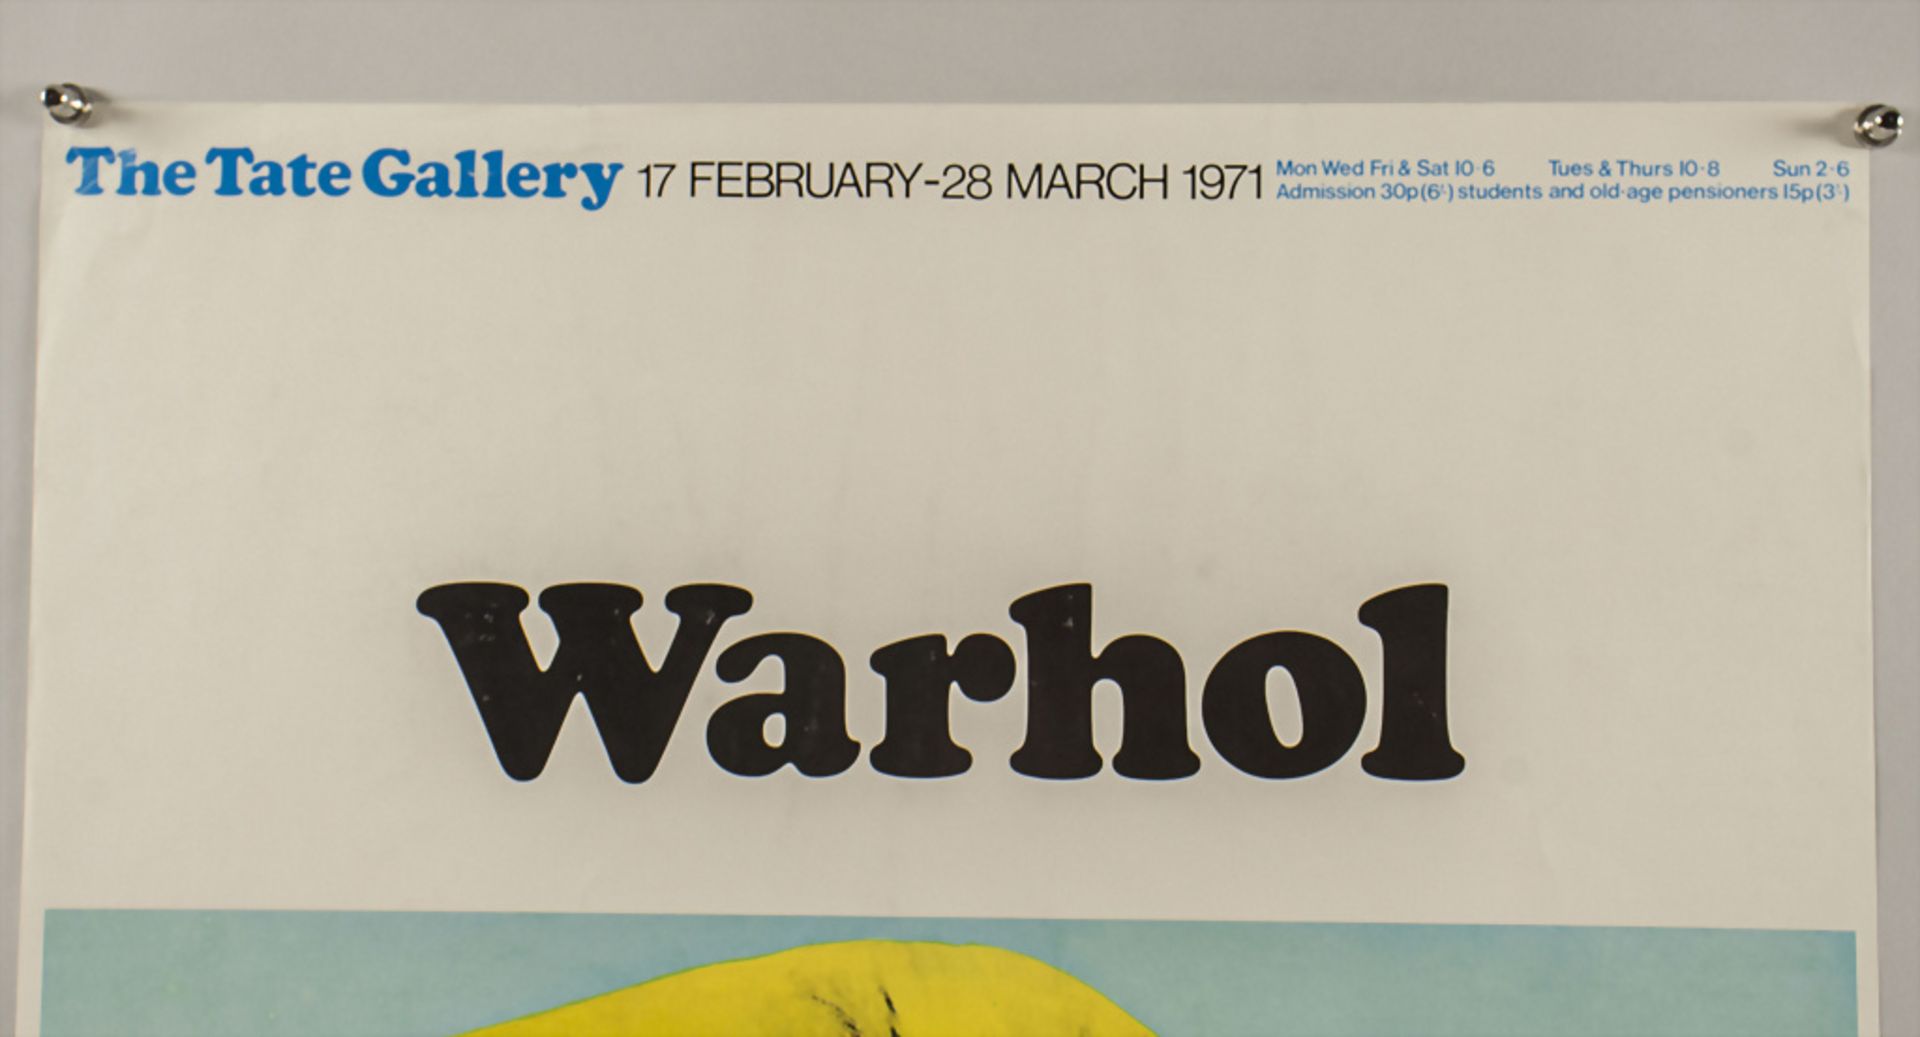 The Tate Gallery London - Warhol, Ausstellungsplakat 1971 - Image 3 of 6